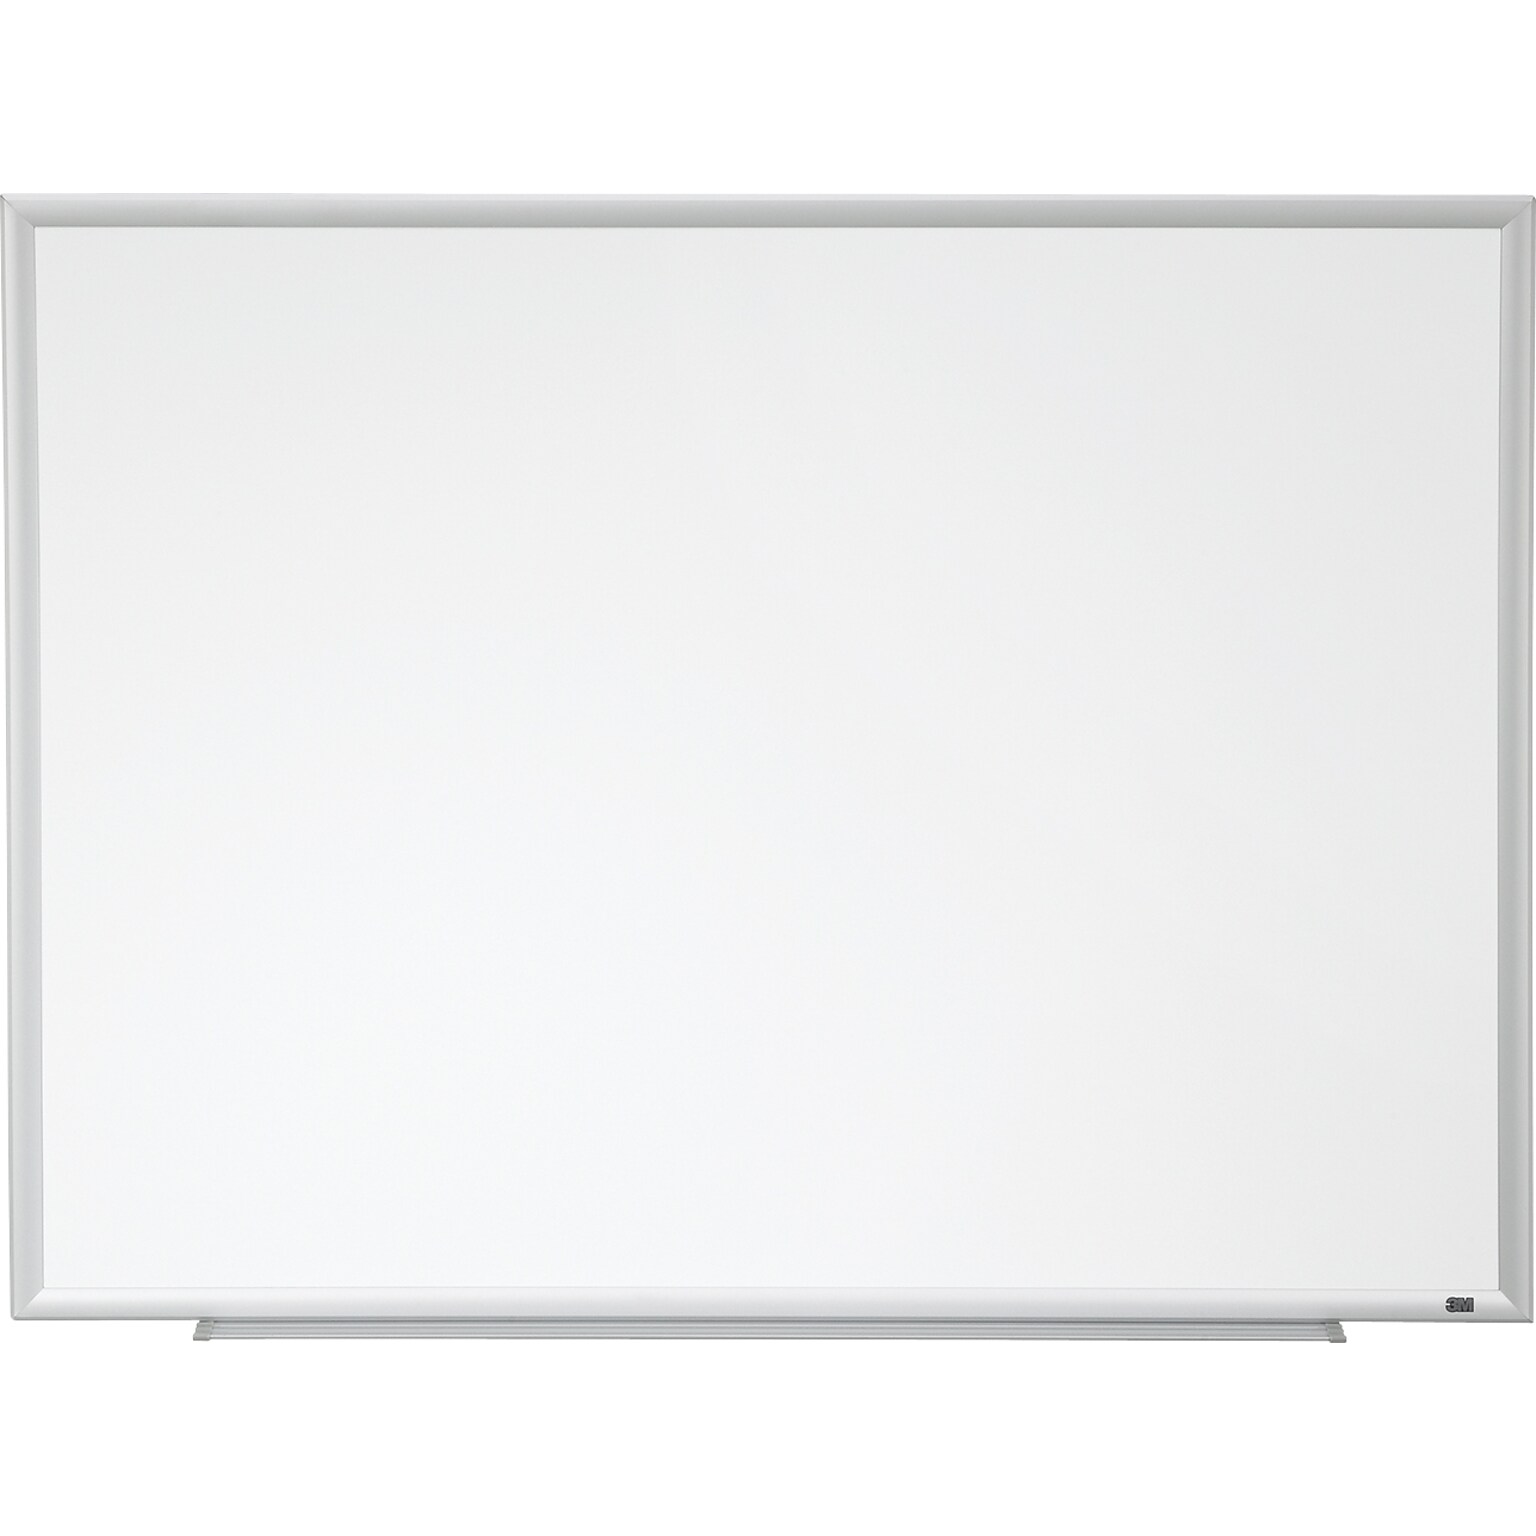 3M Porcelain Dry Erase Board, Aluminum Frame, 72 x 48 (DEP7248A)